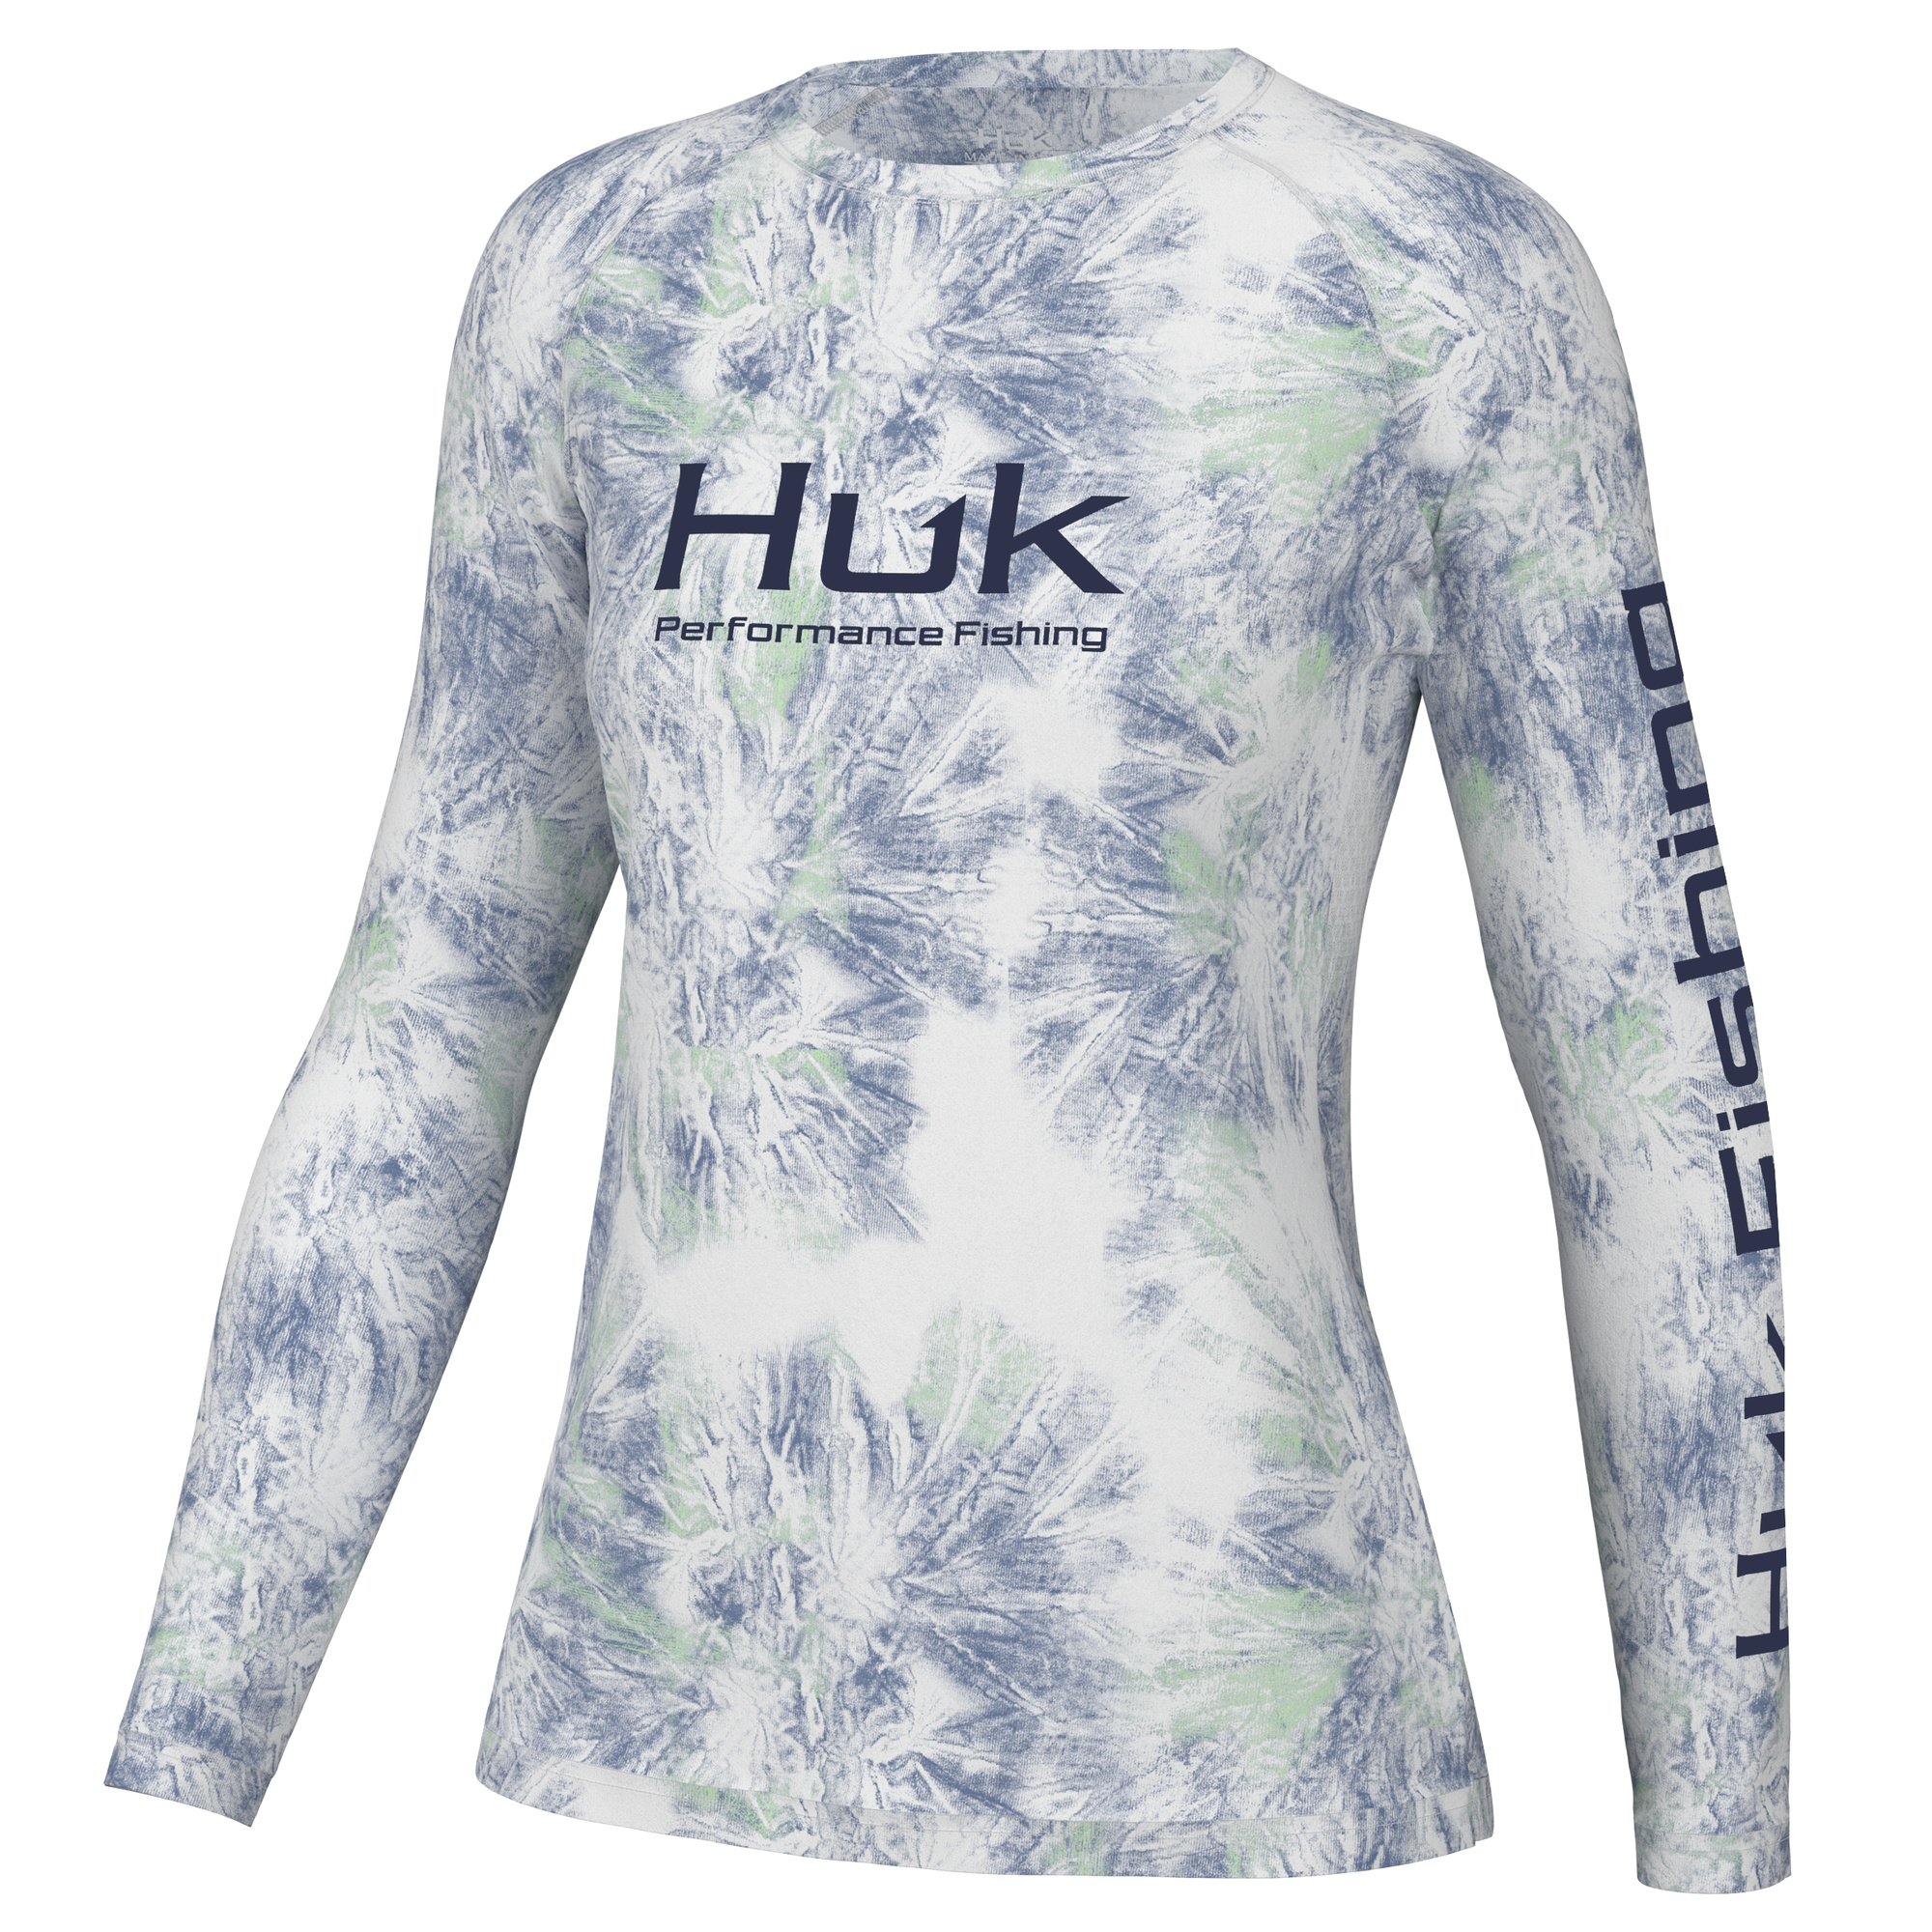 Huk Women's Pursuit Performance LS Shirt - Aqua Dye White - L